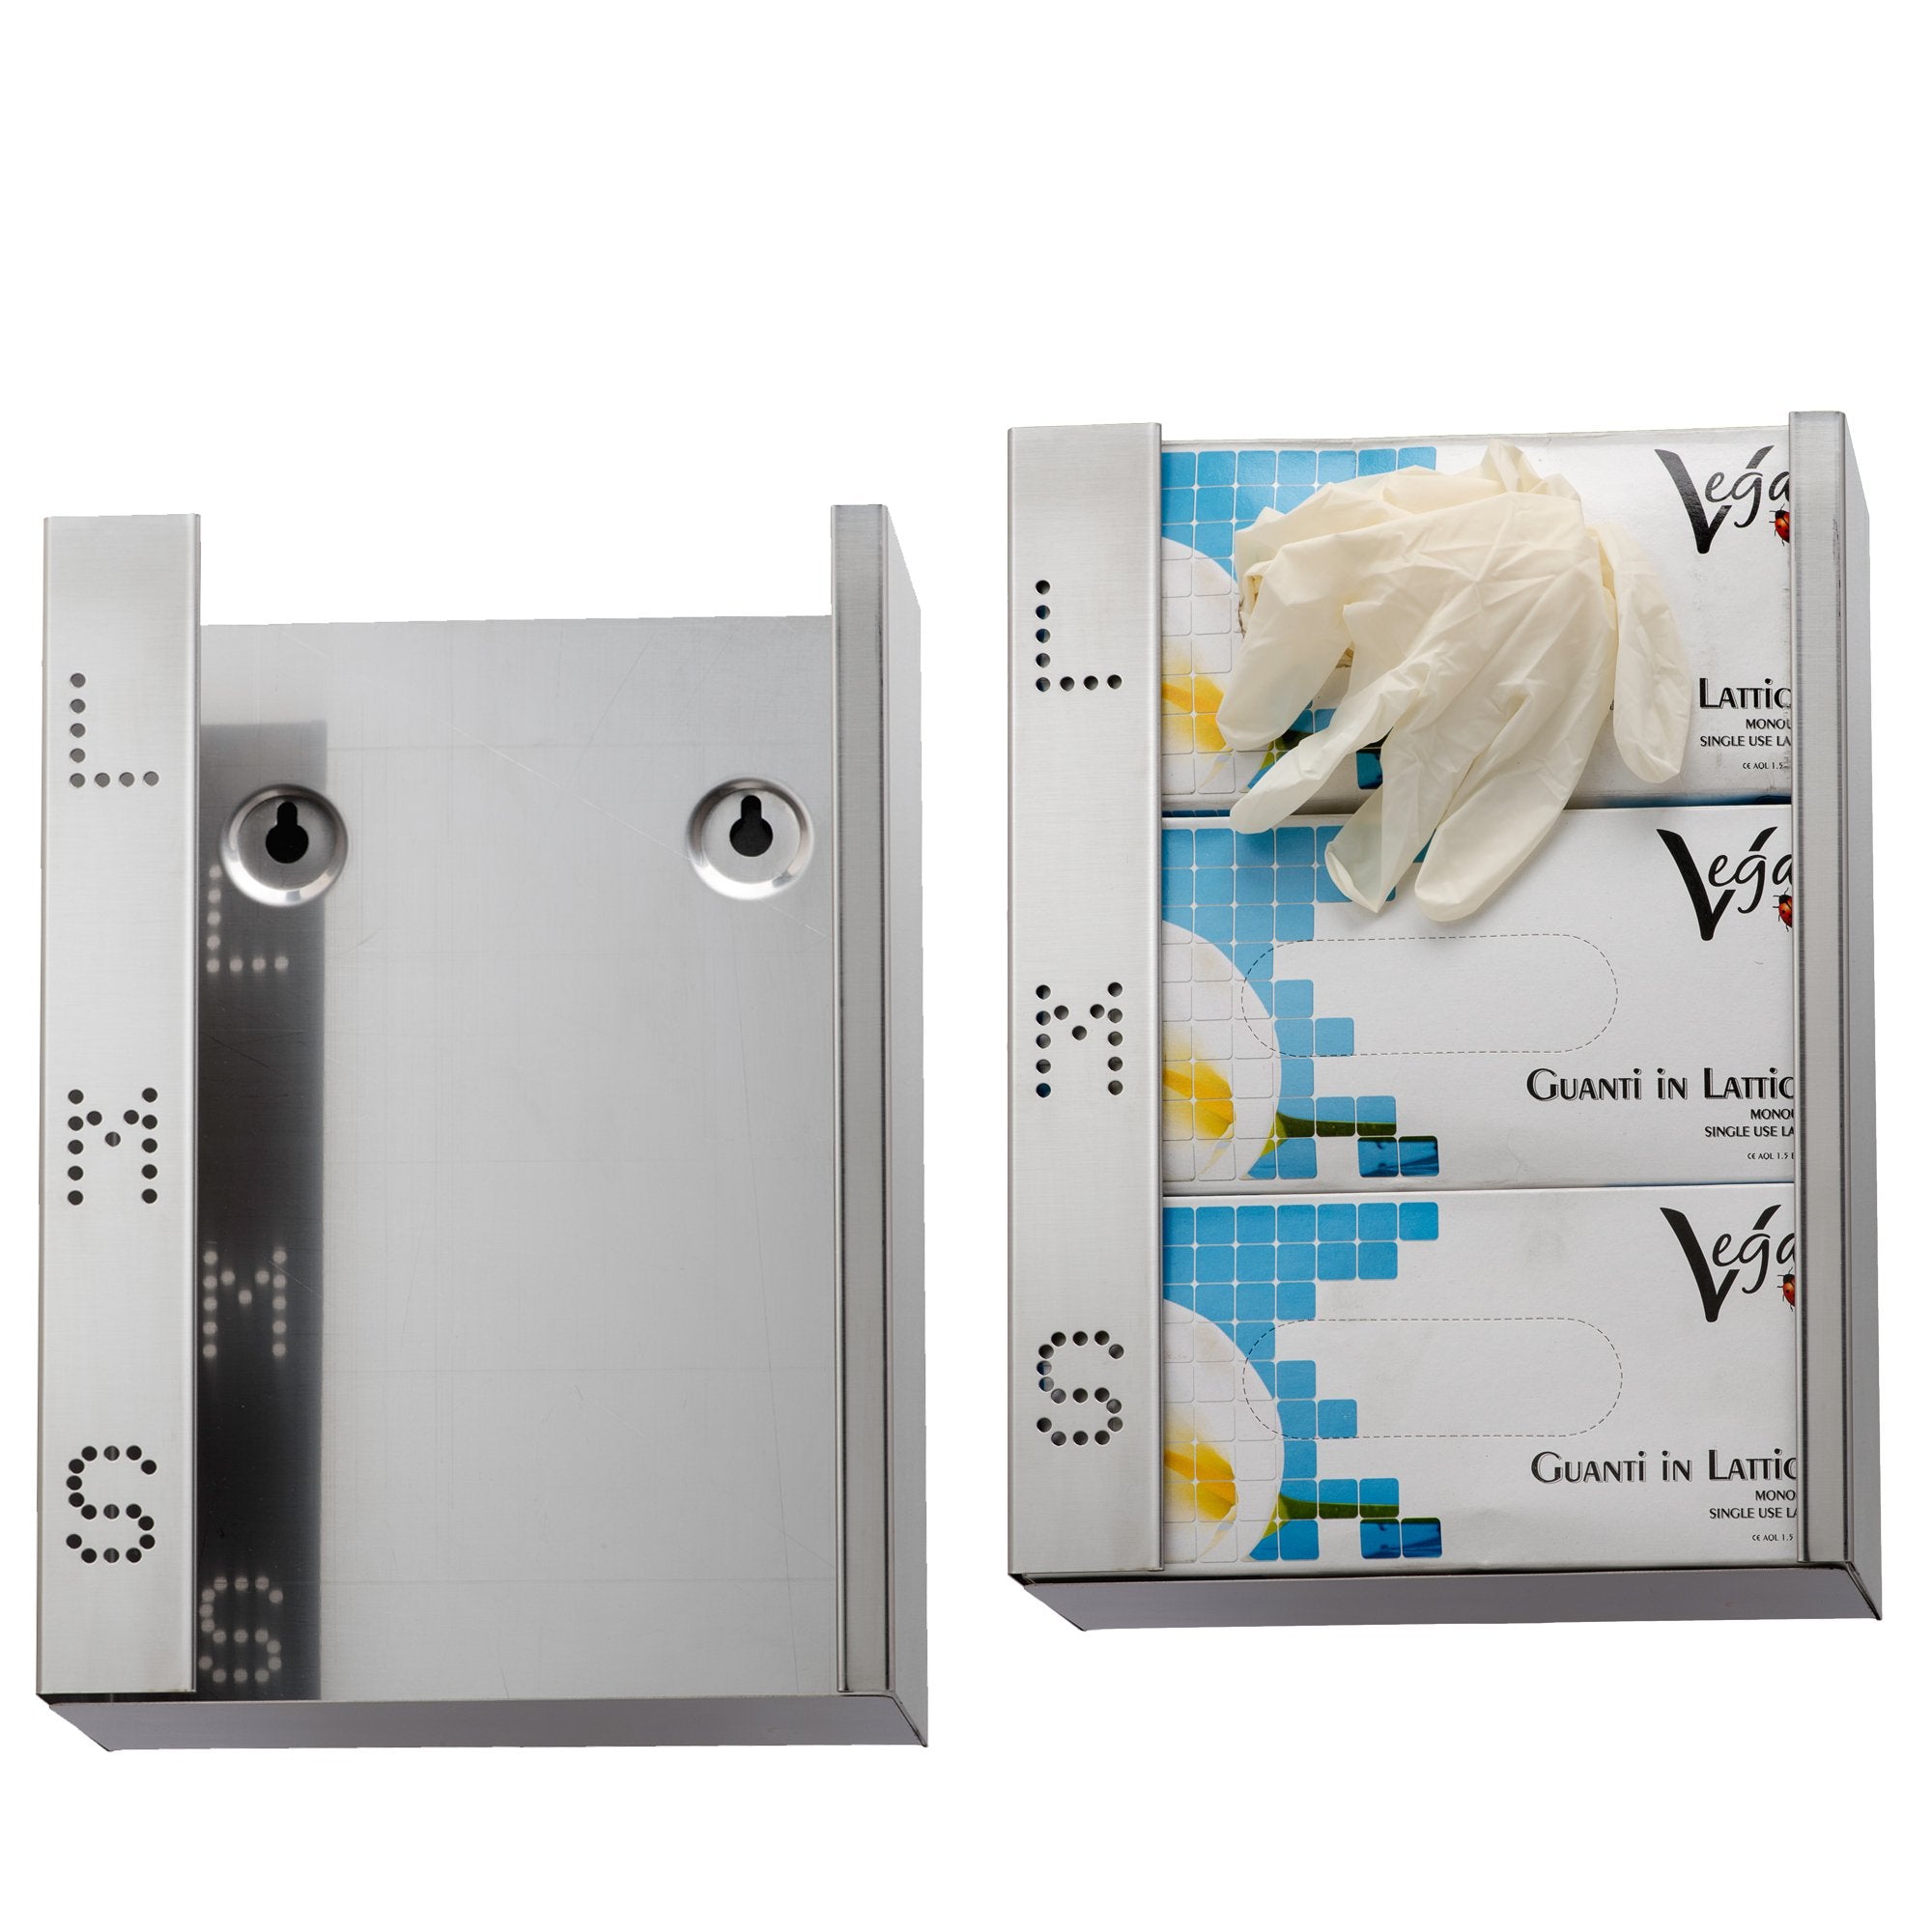 medialinternational-dispenser-guanti-monouso-acciaio-inox